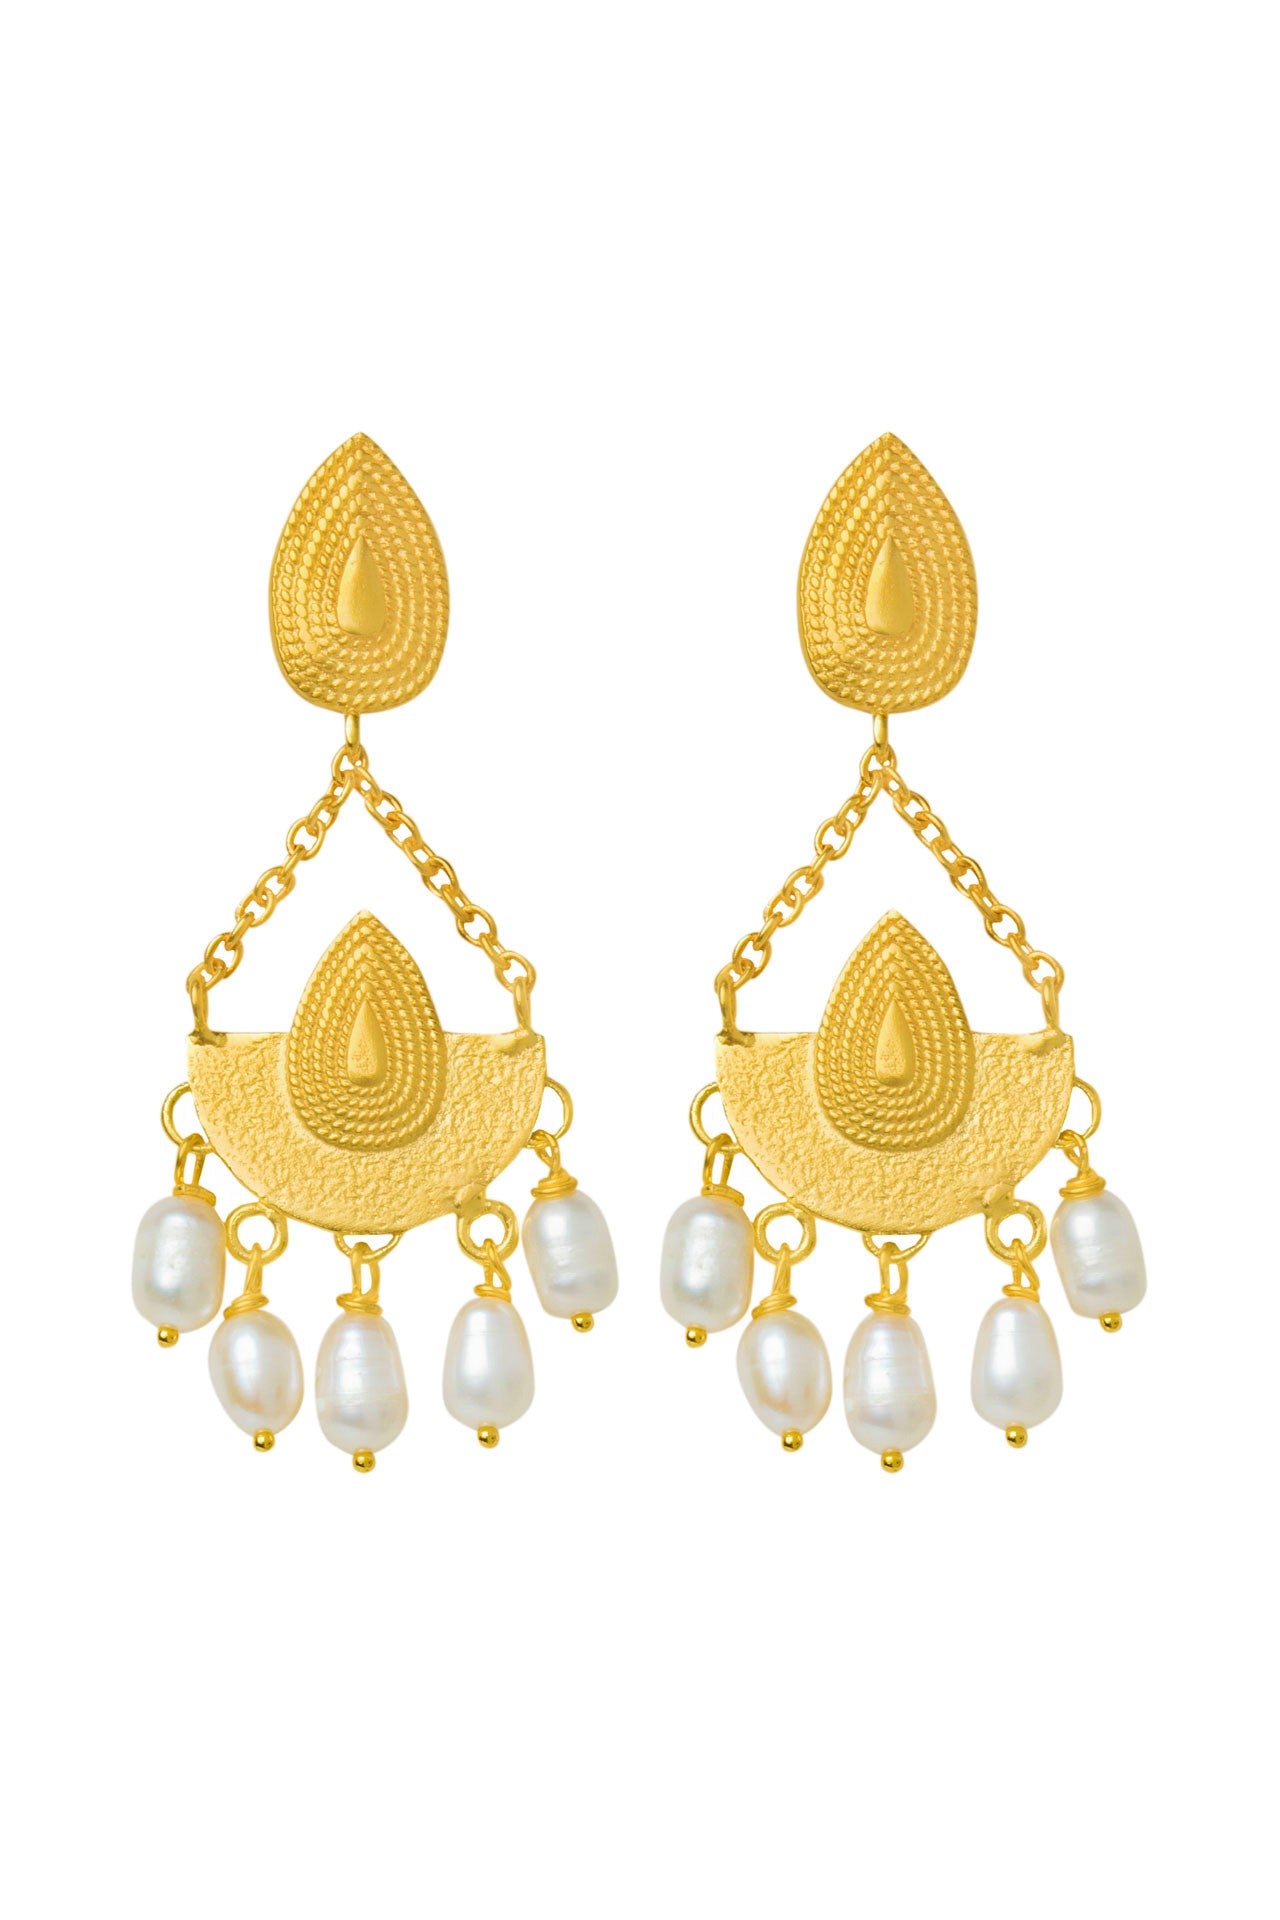 Bianca pearl earrings by Pearl Martini